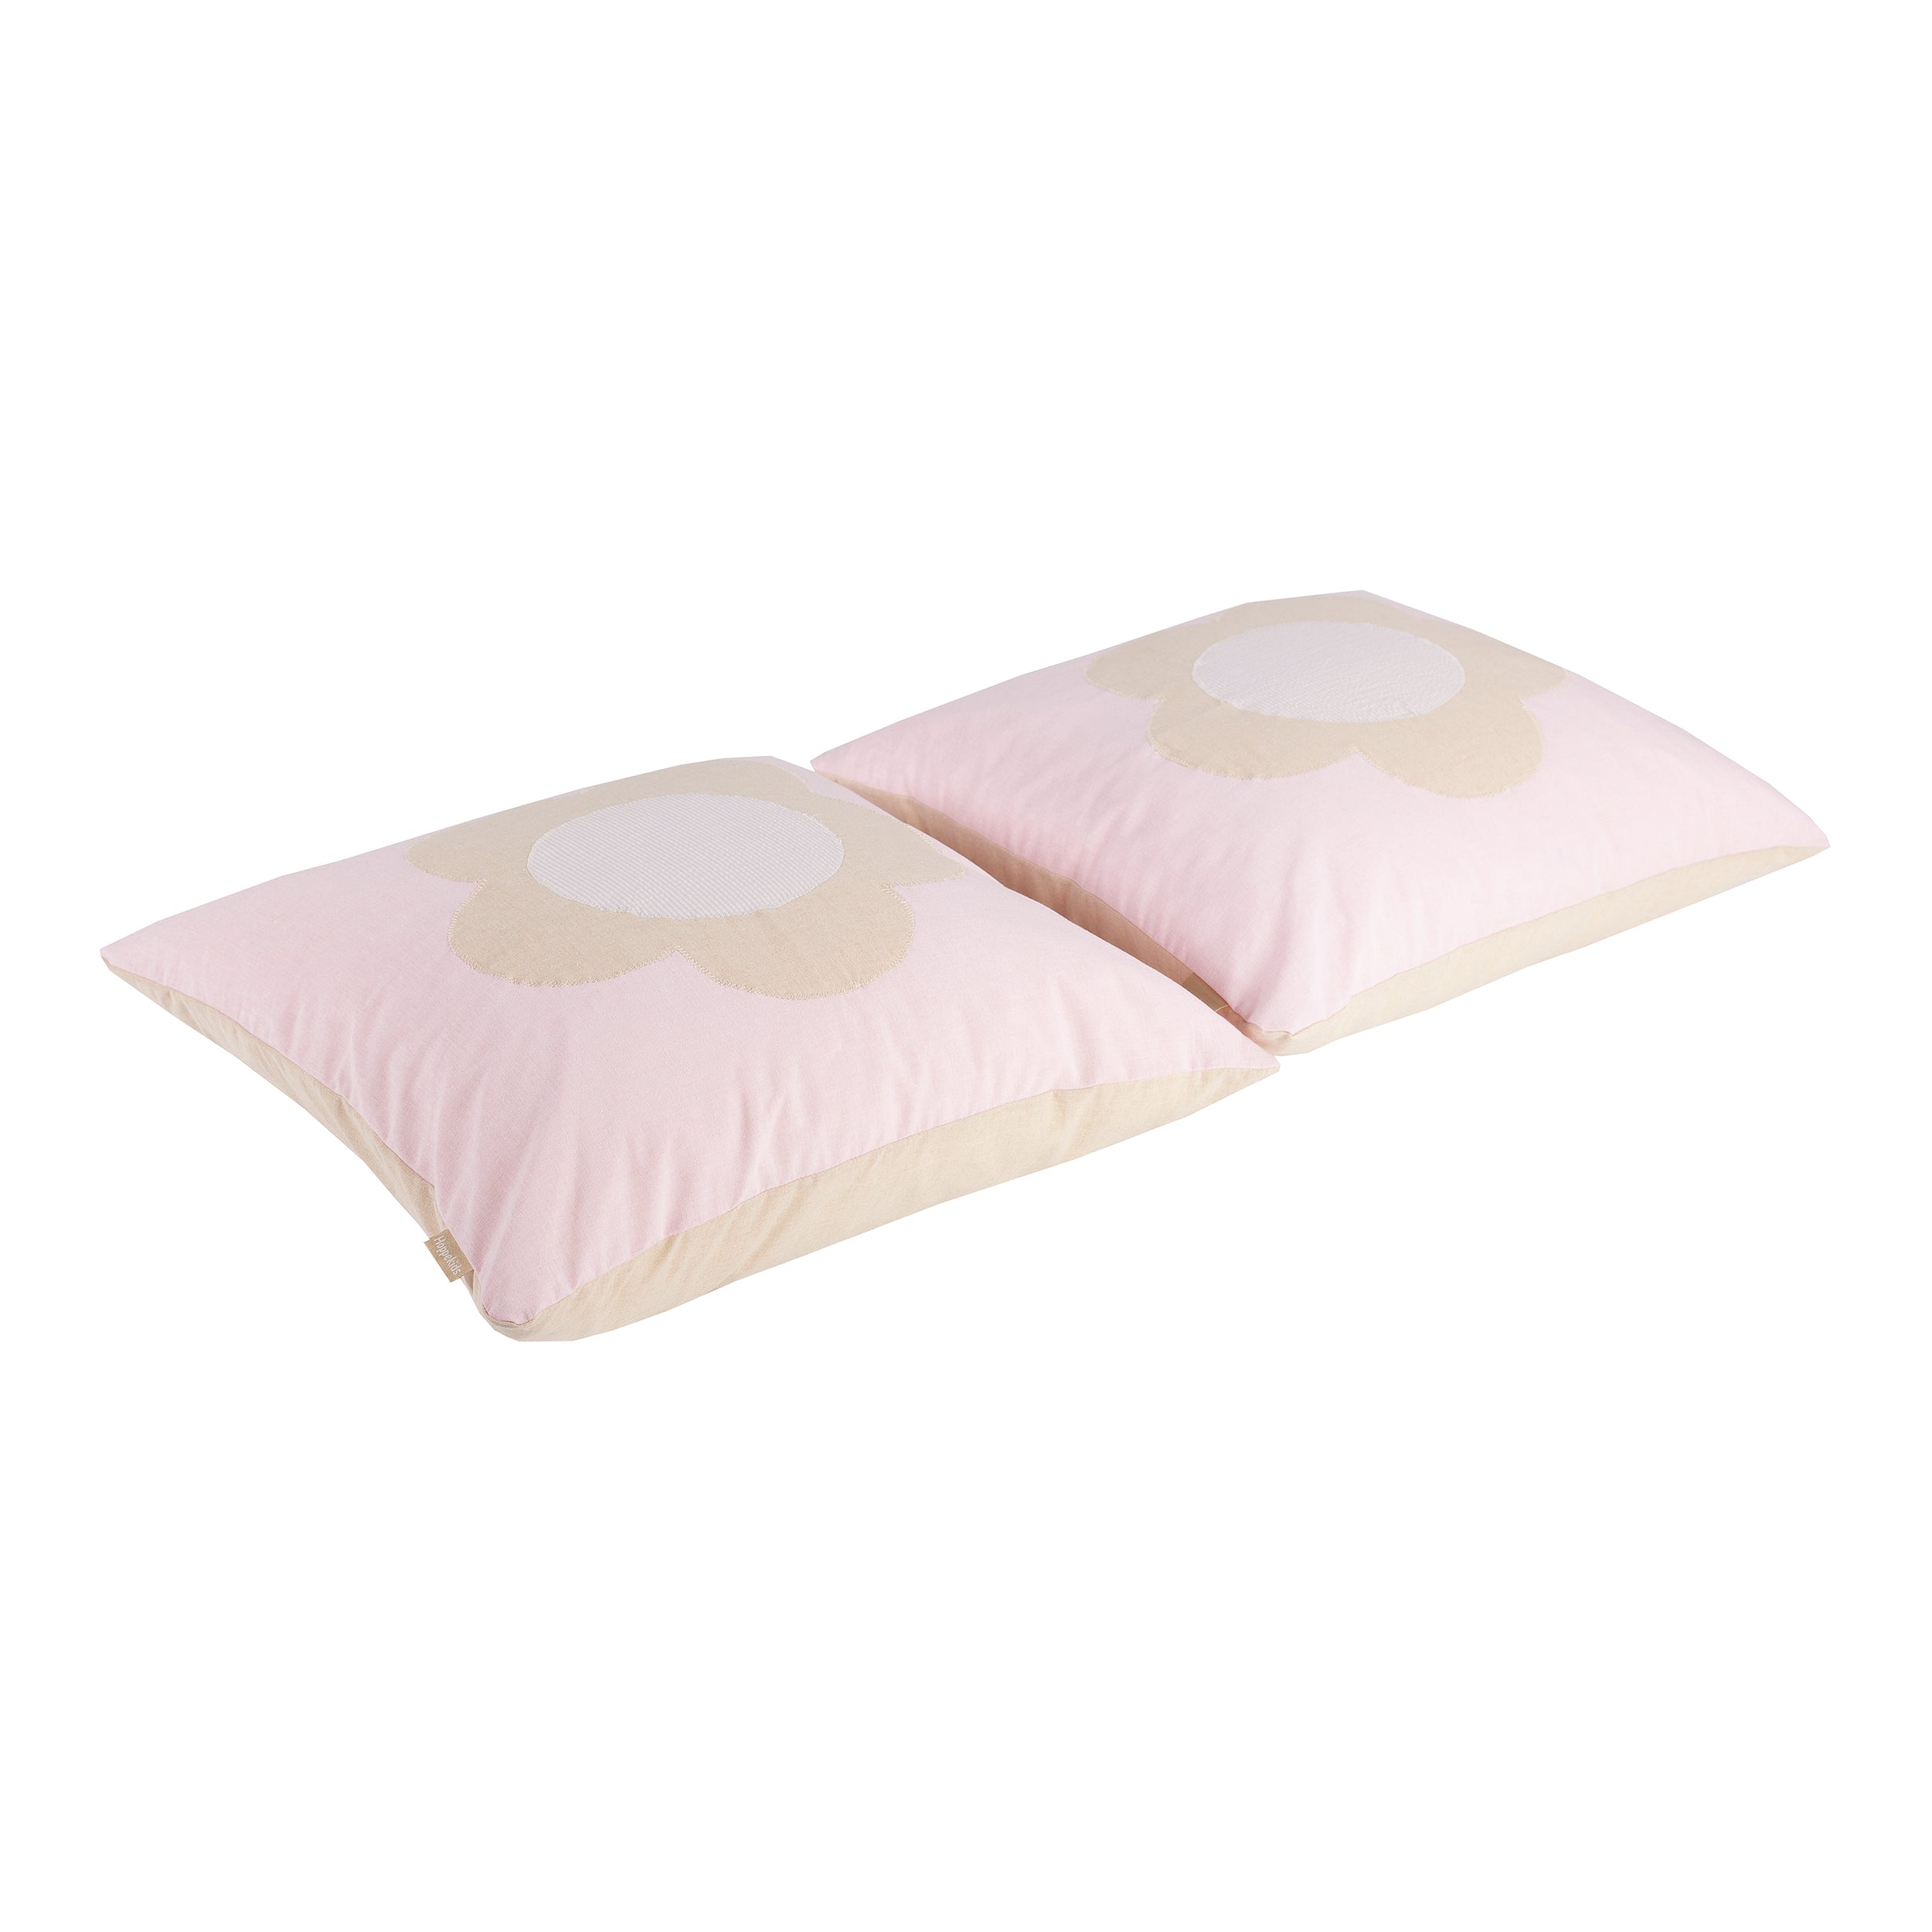 Hoppekids Fairytale Flower cushion set with 2 cushions